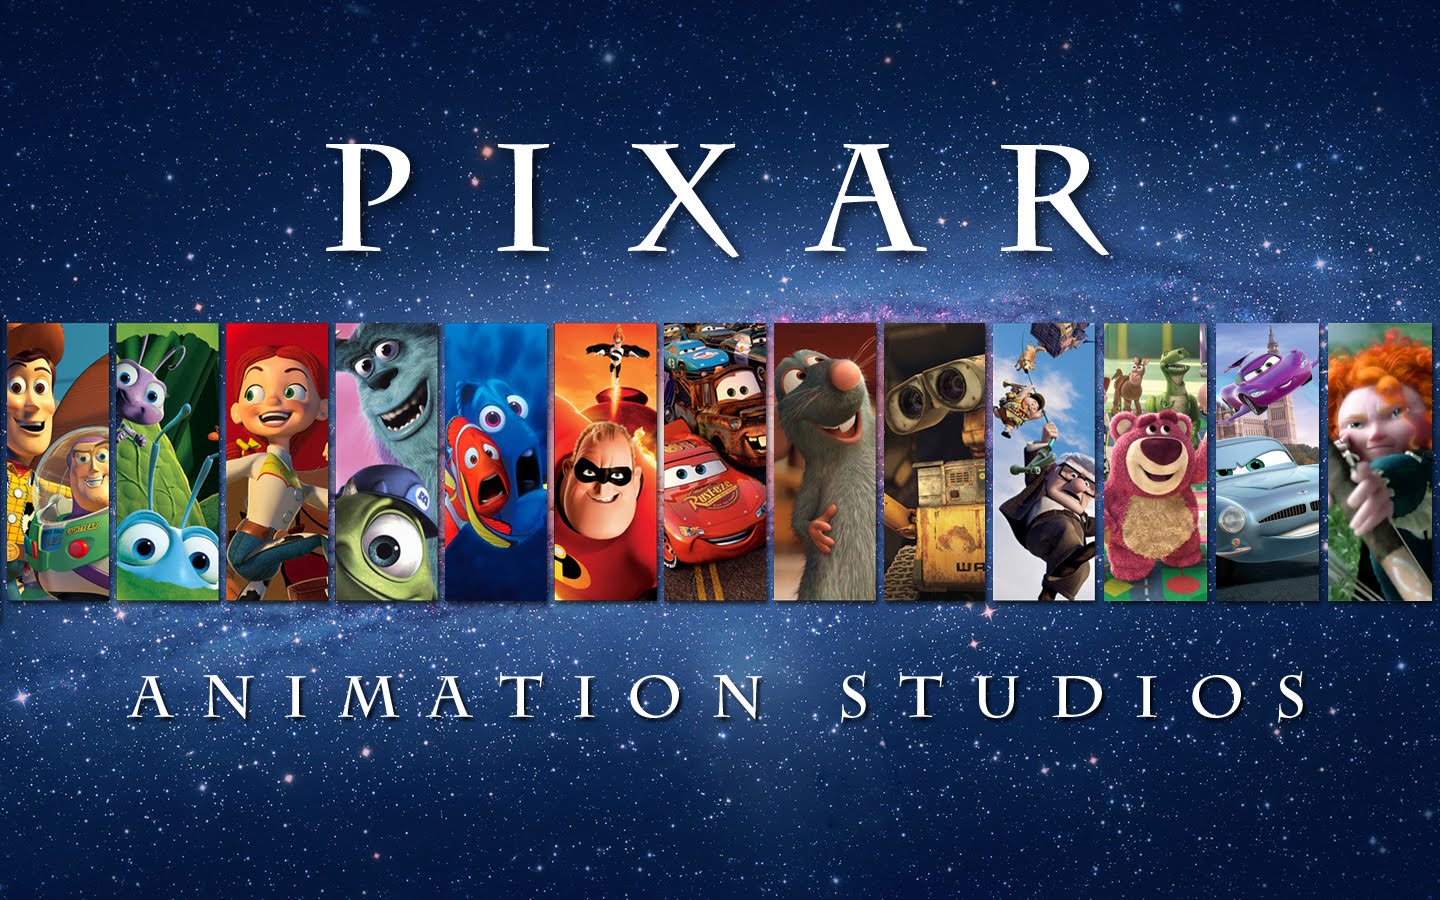 Pixar-Studios